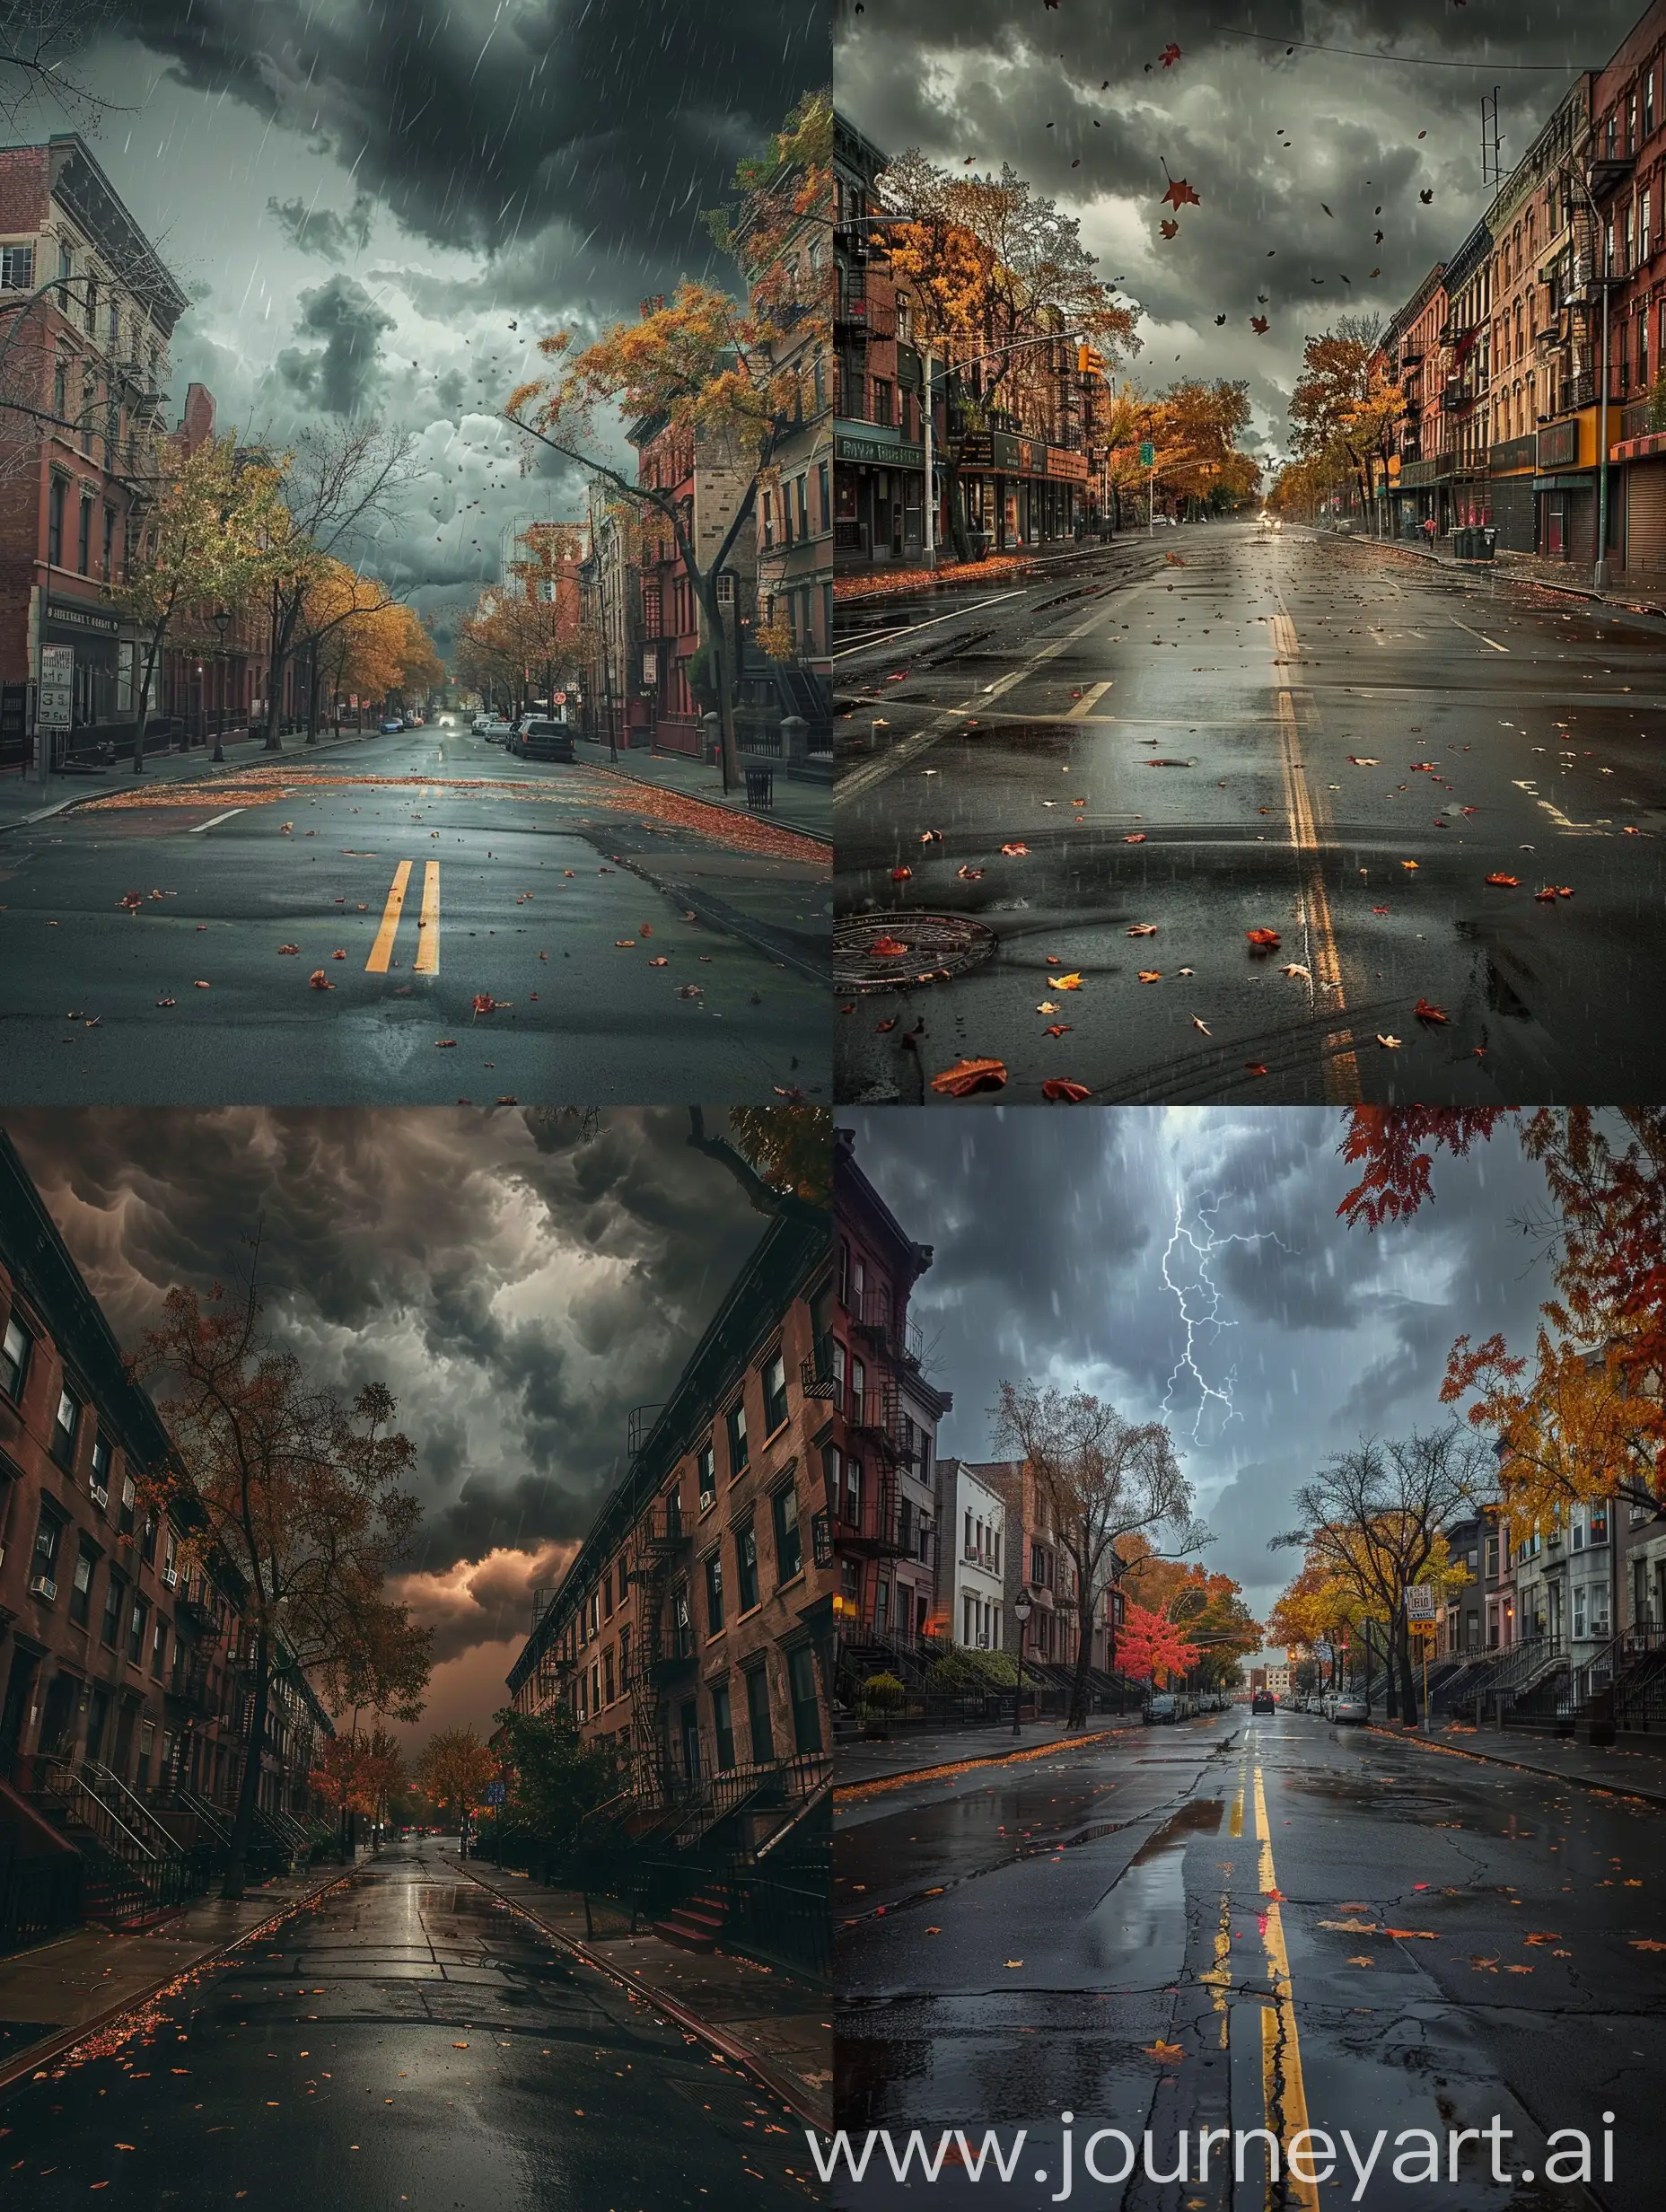 Empty streets of Harlem, fall thunderstorm, surreal, odd 